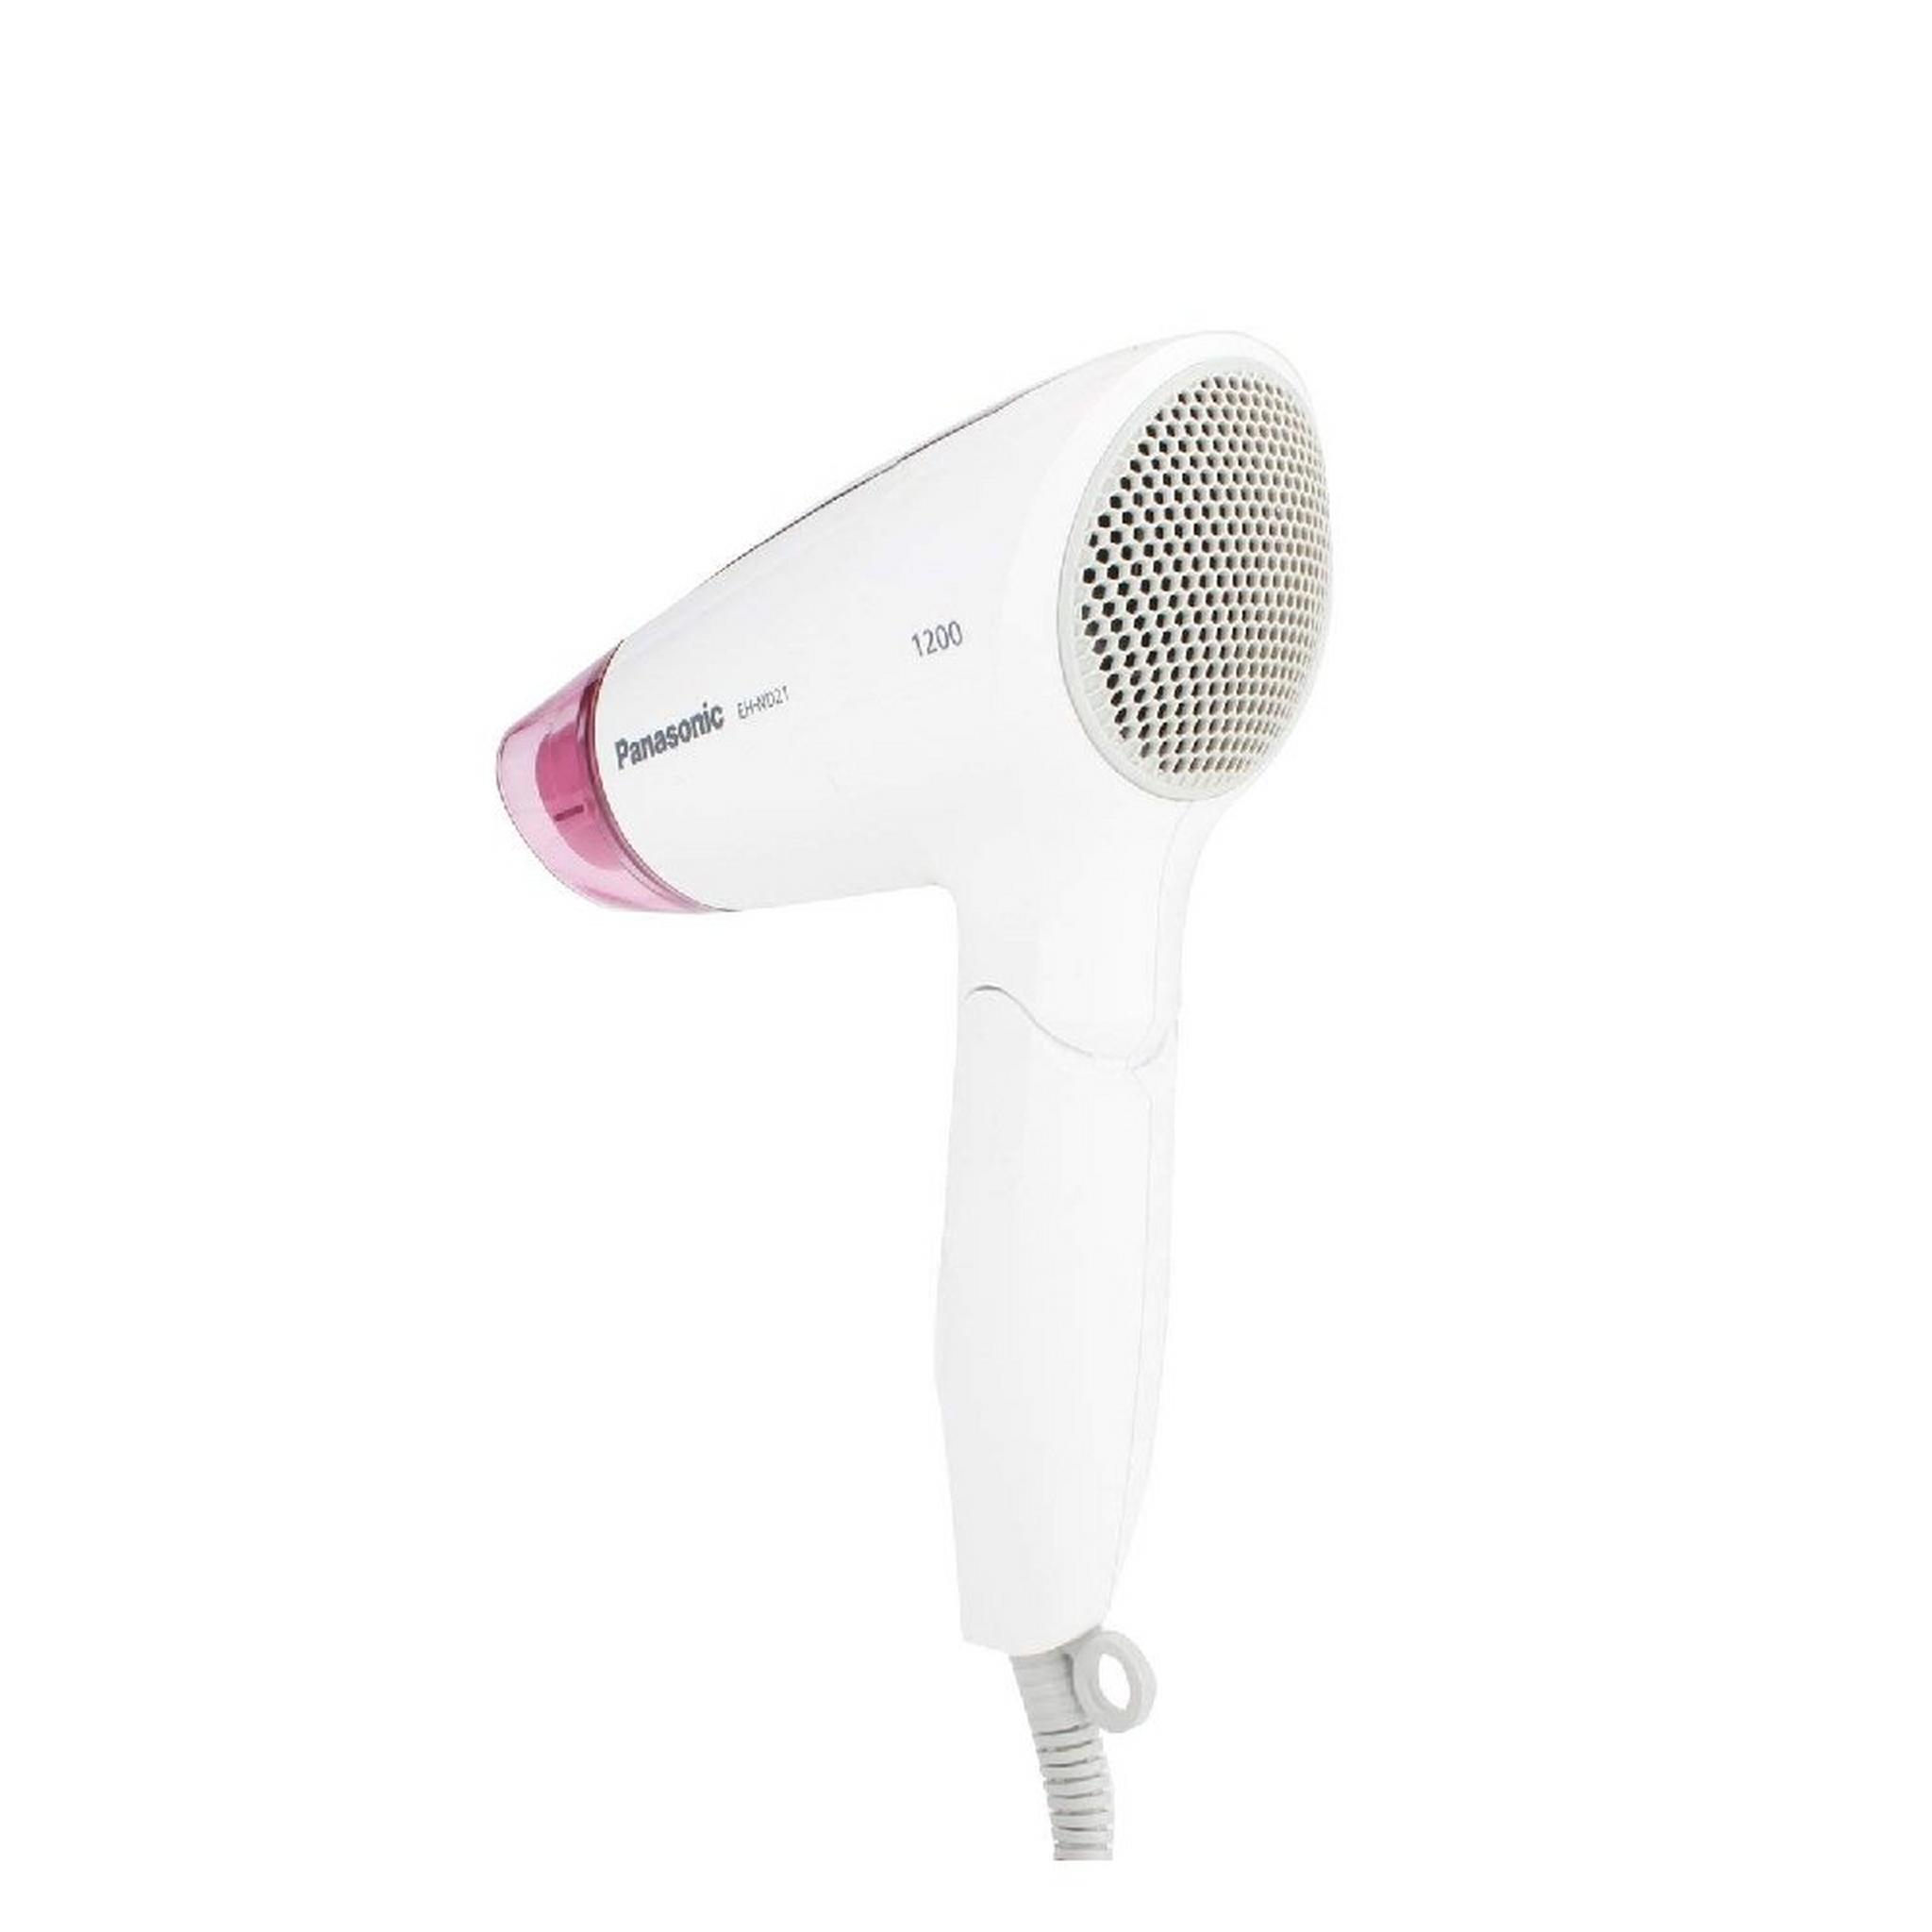 Panasonic Hair Dryer, 1200W, 3 Heat Settings, EH-ND21-P695 - White& pink